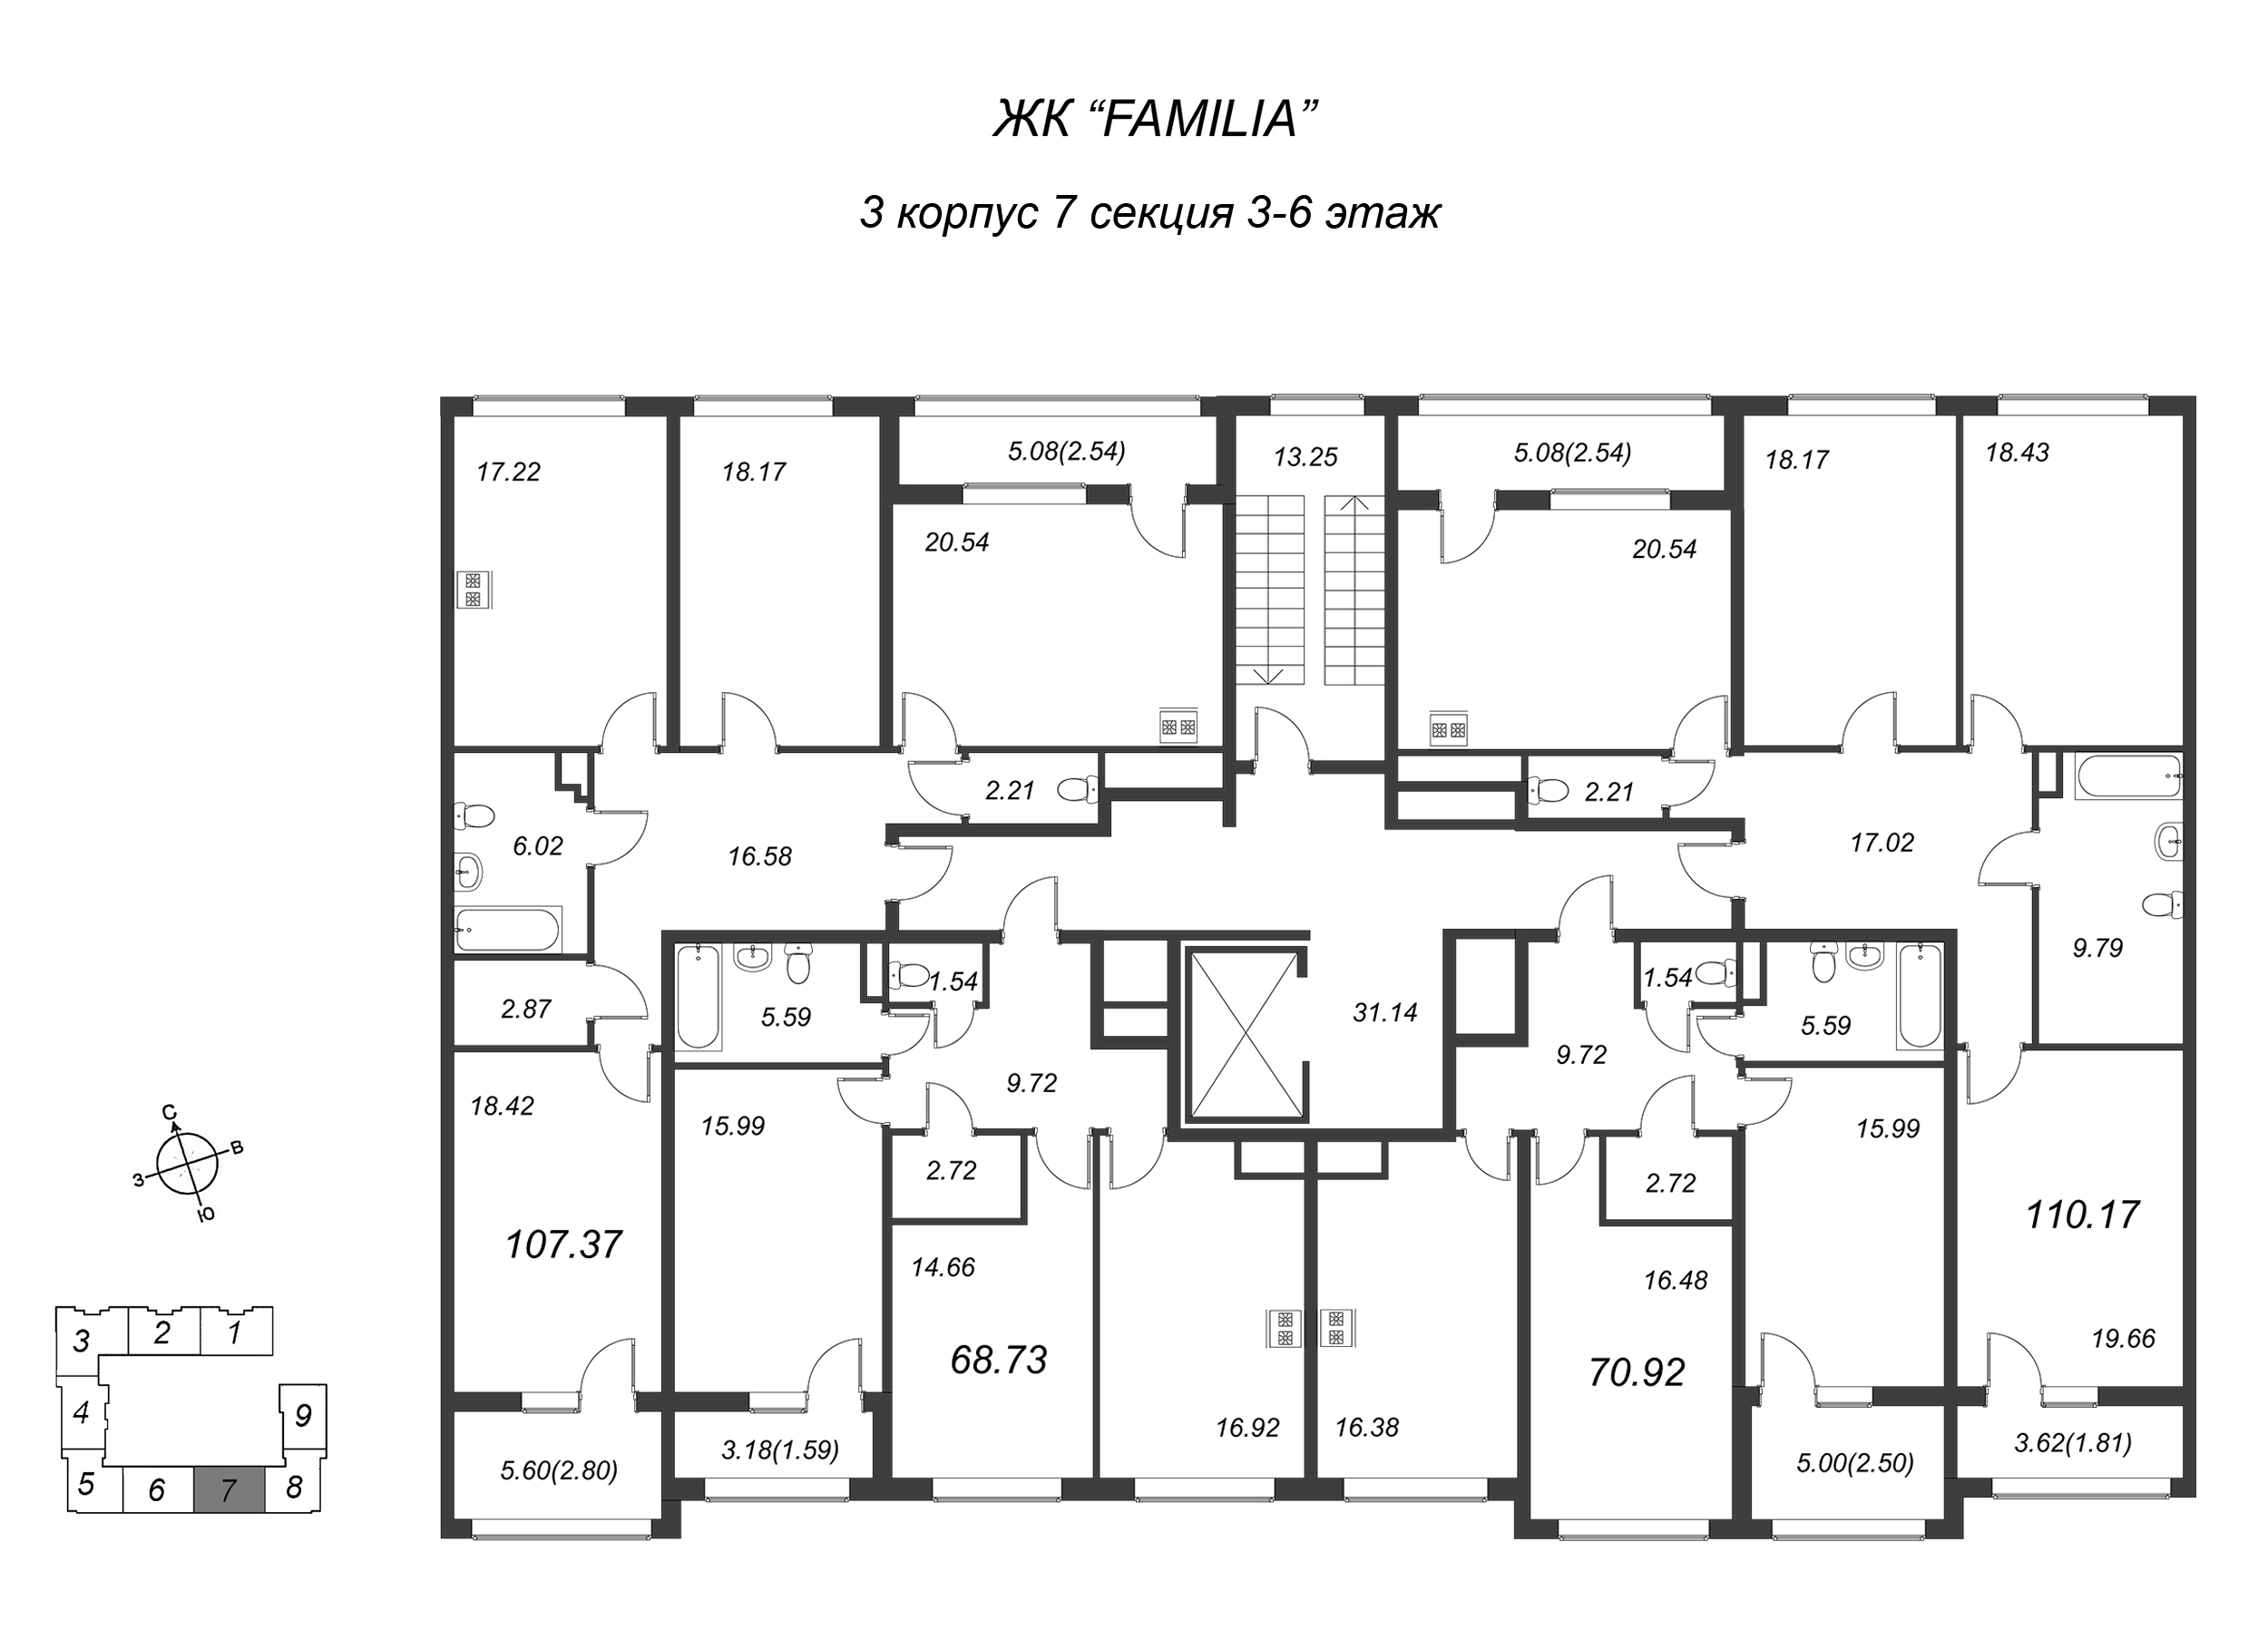 4-комнатная (Евро) квартира, 110.4 м² в ЖК "FAMILIA" - планировка этажа